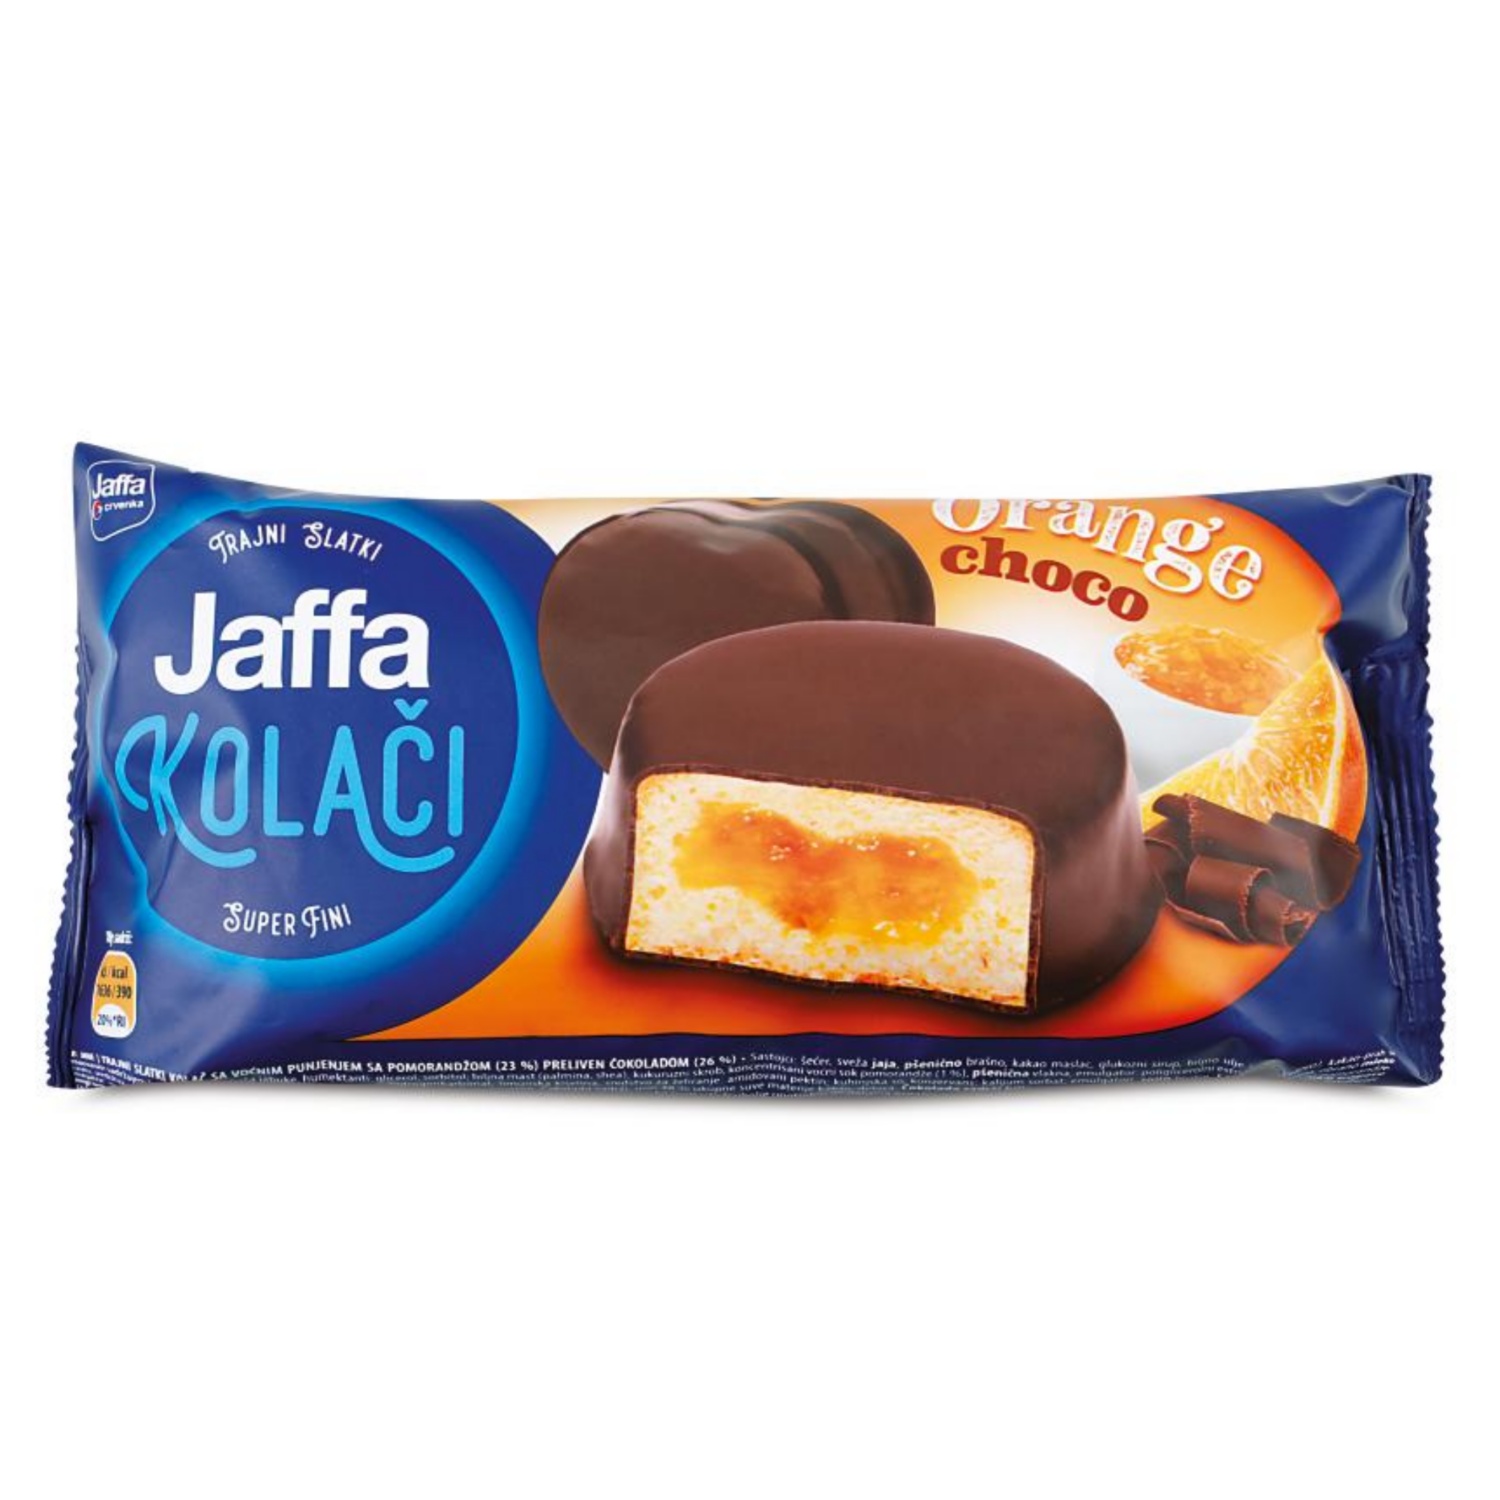 JAFFA Kolač, Orange Choco